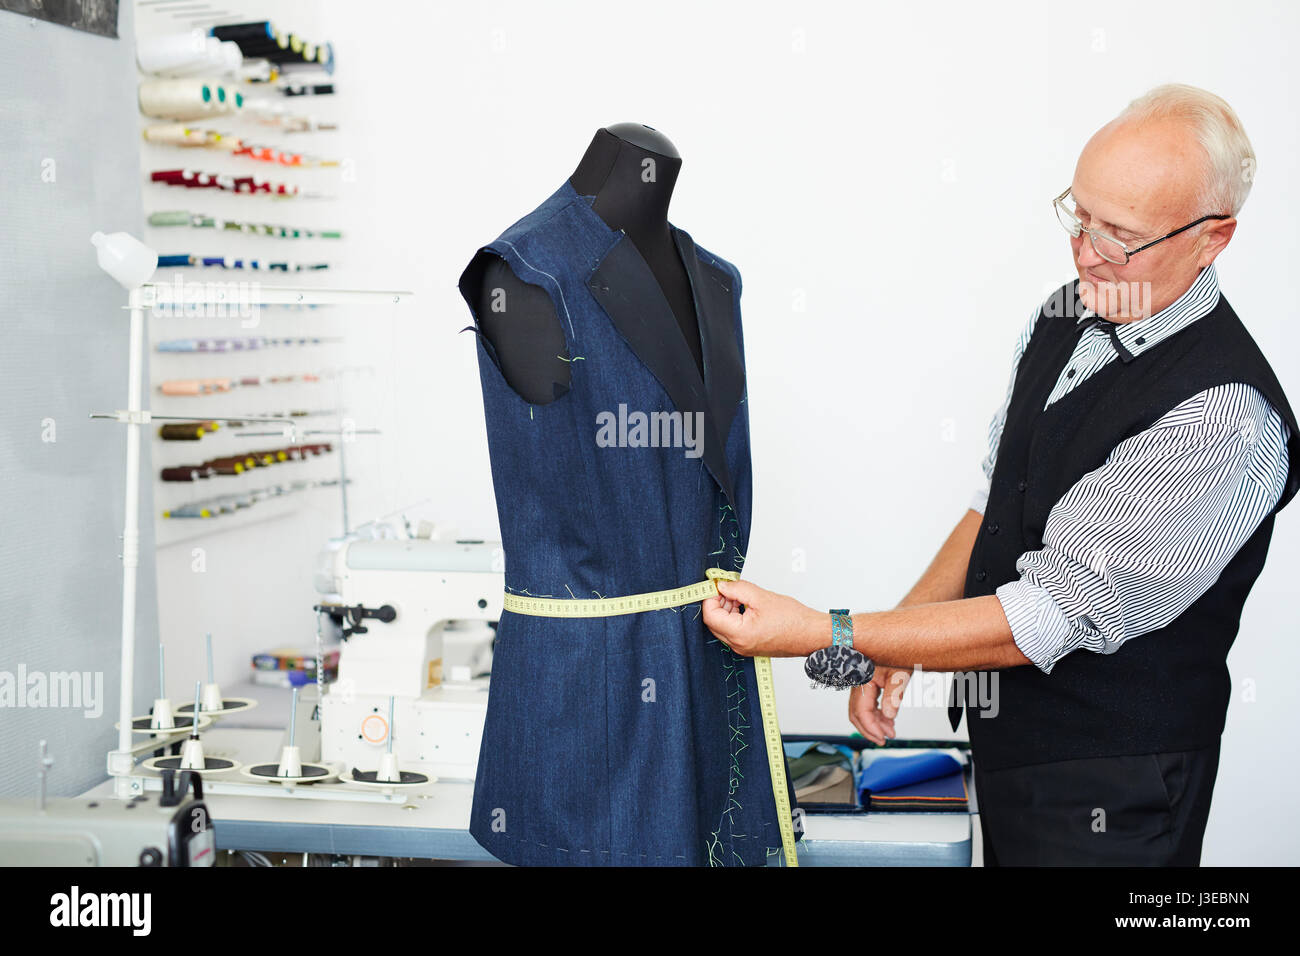 https://c8.alamy.com/comp/J3EBNN/old-tailor-measuring-suit-on-mannequin-J3EBNN.jpg